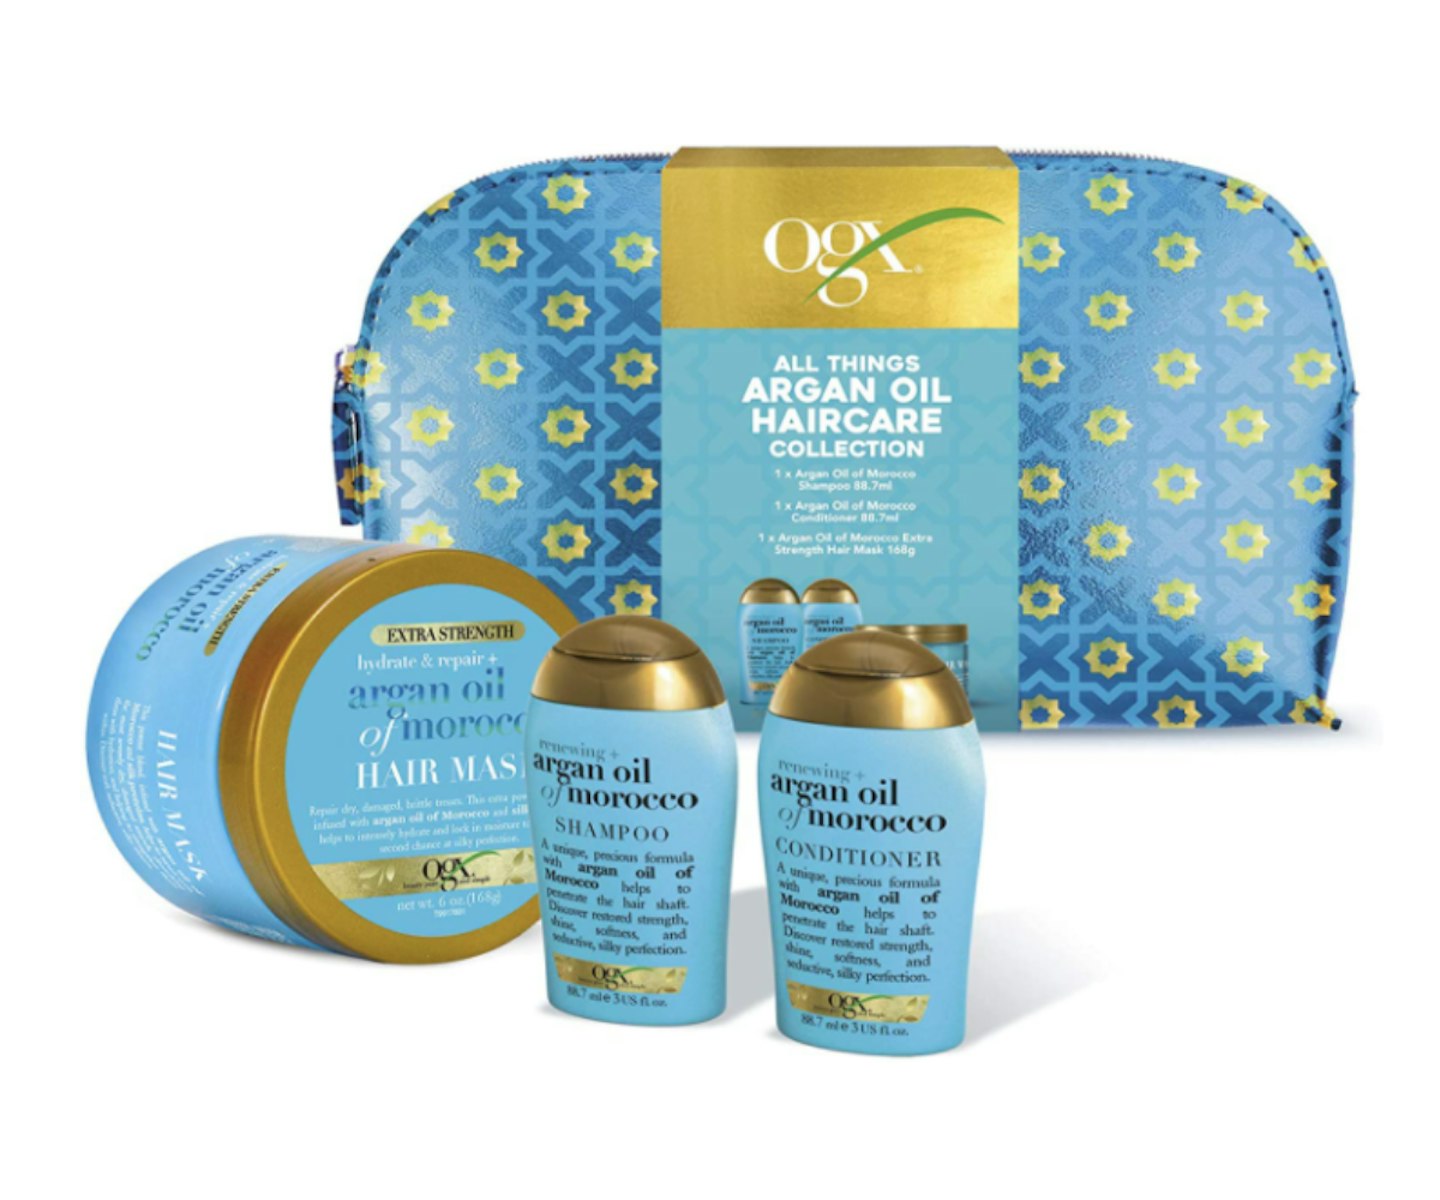 OGX Gift Set, Argan Oil of Morroco Hair Care Gift Set